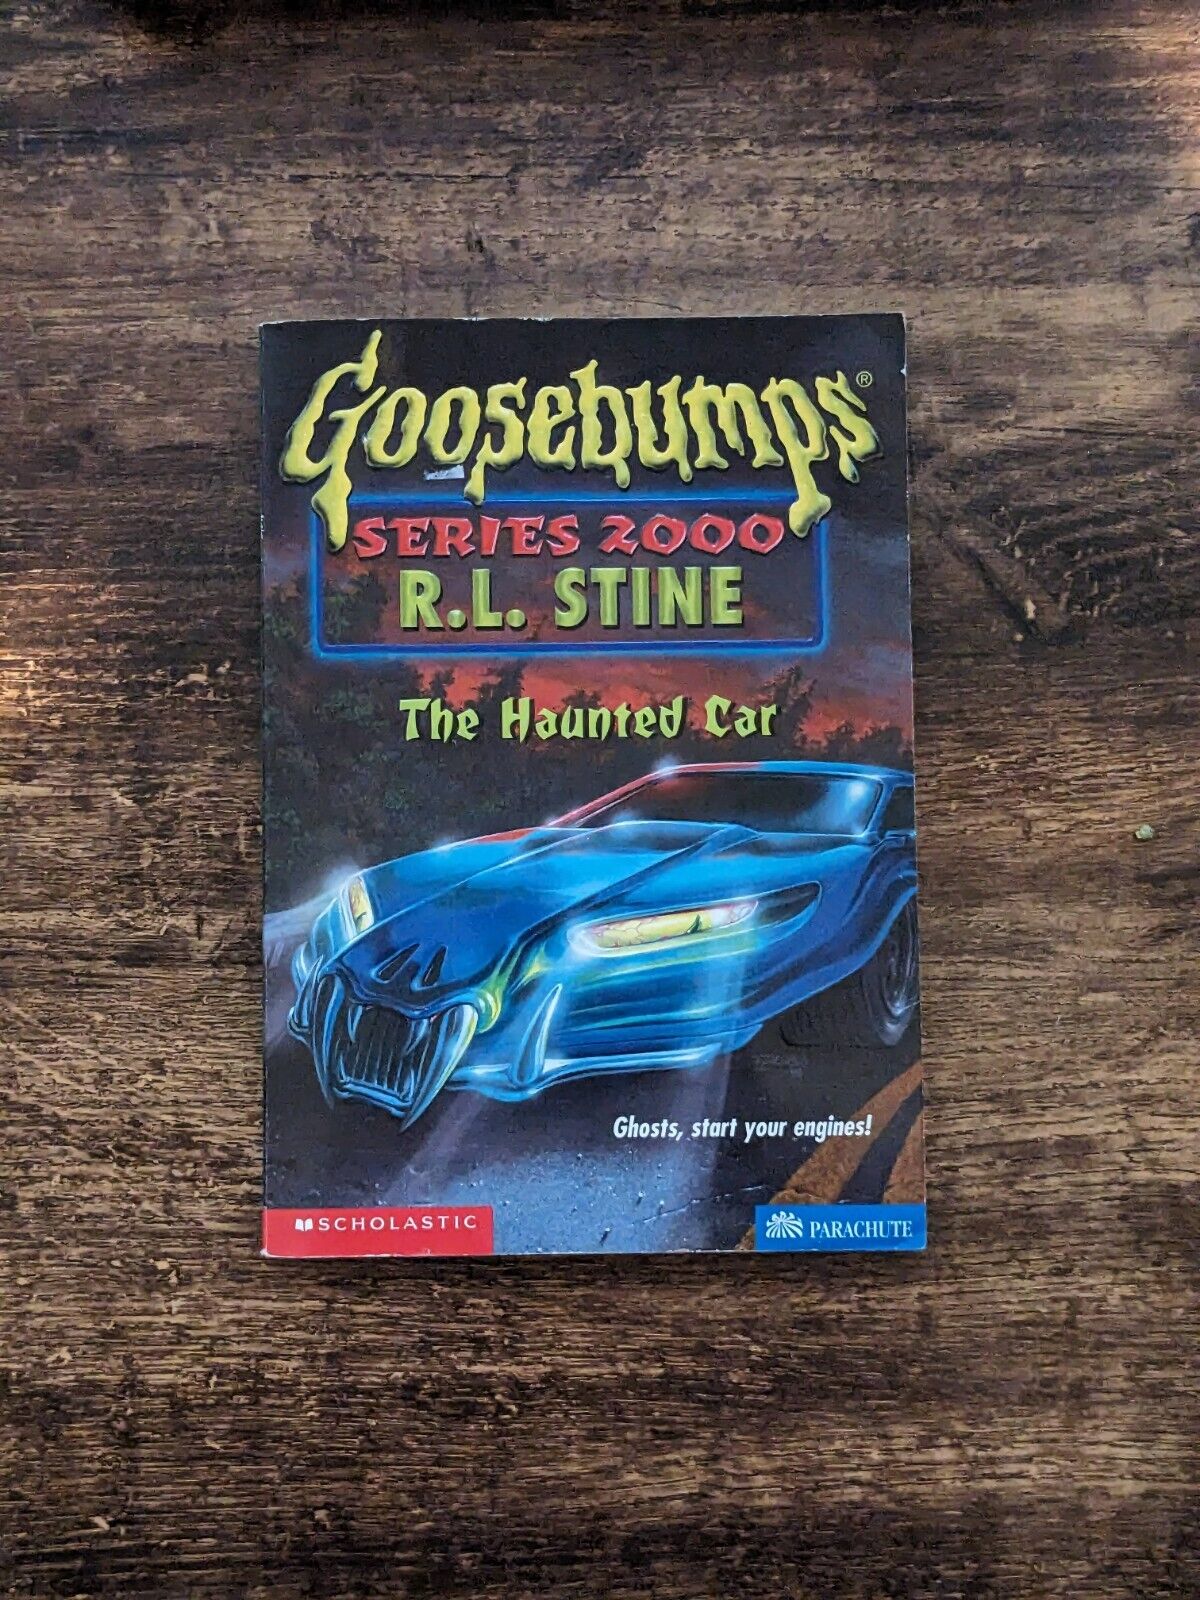 Haunted Car, The (Goosebumps Series 2000 #21) by R. L. Stine (1999, Trade Paperback) - Asylum Books